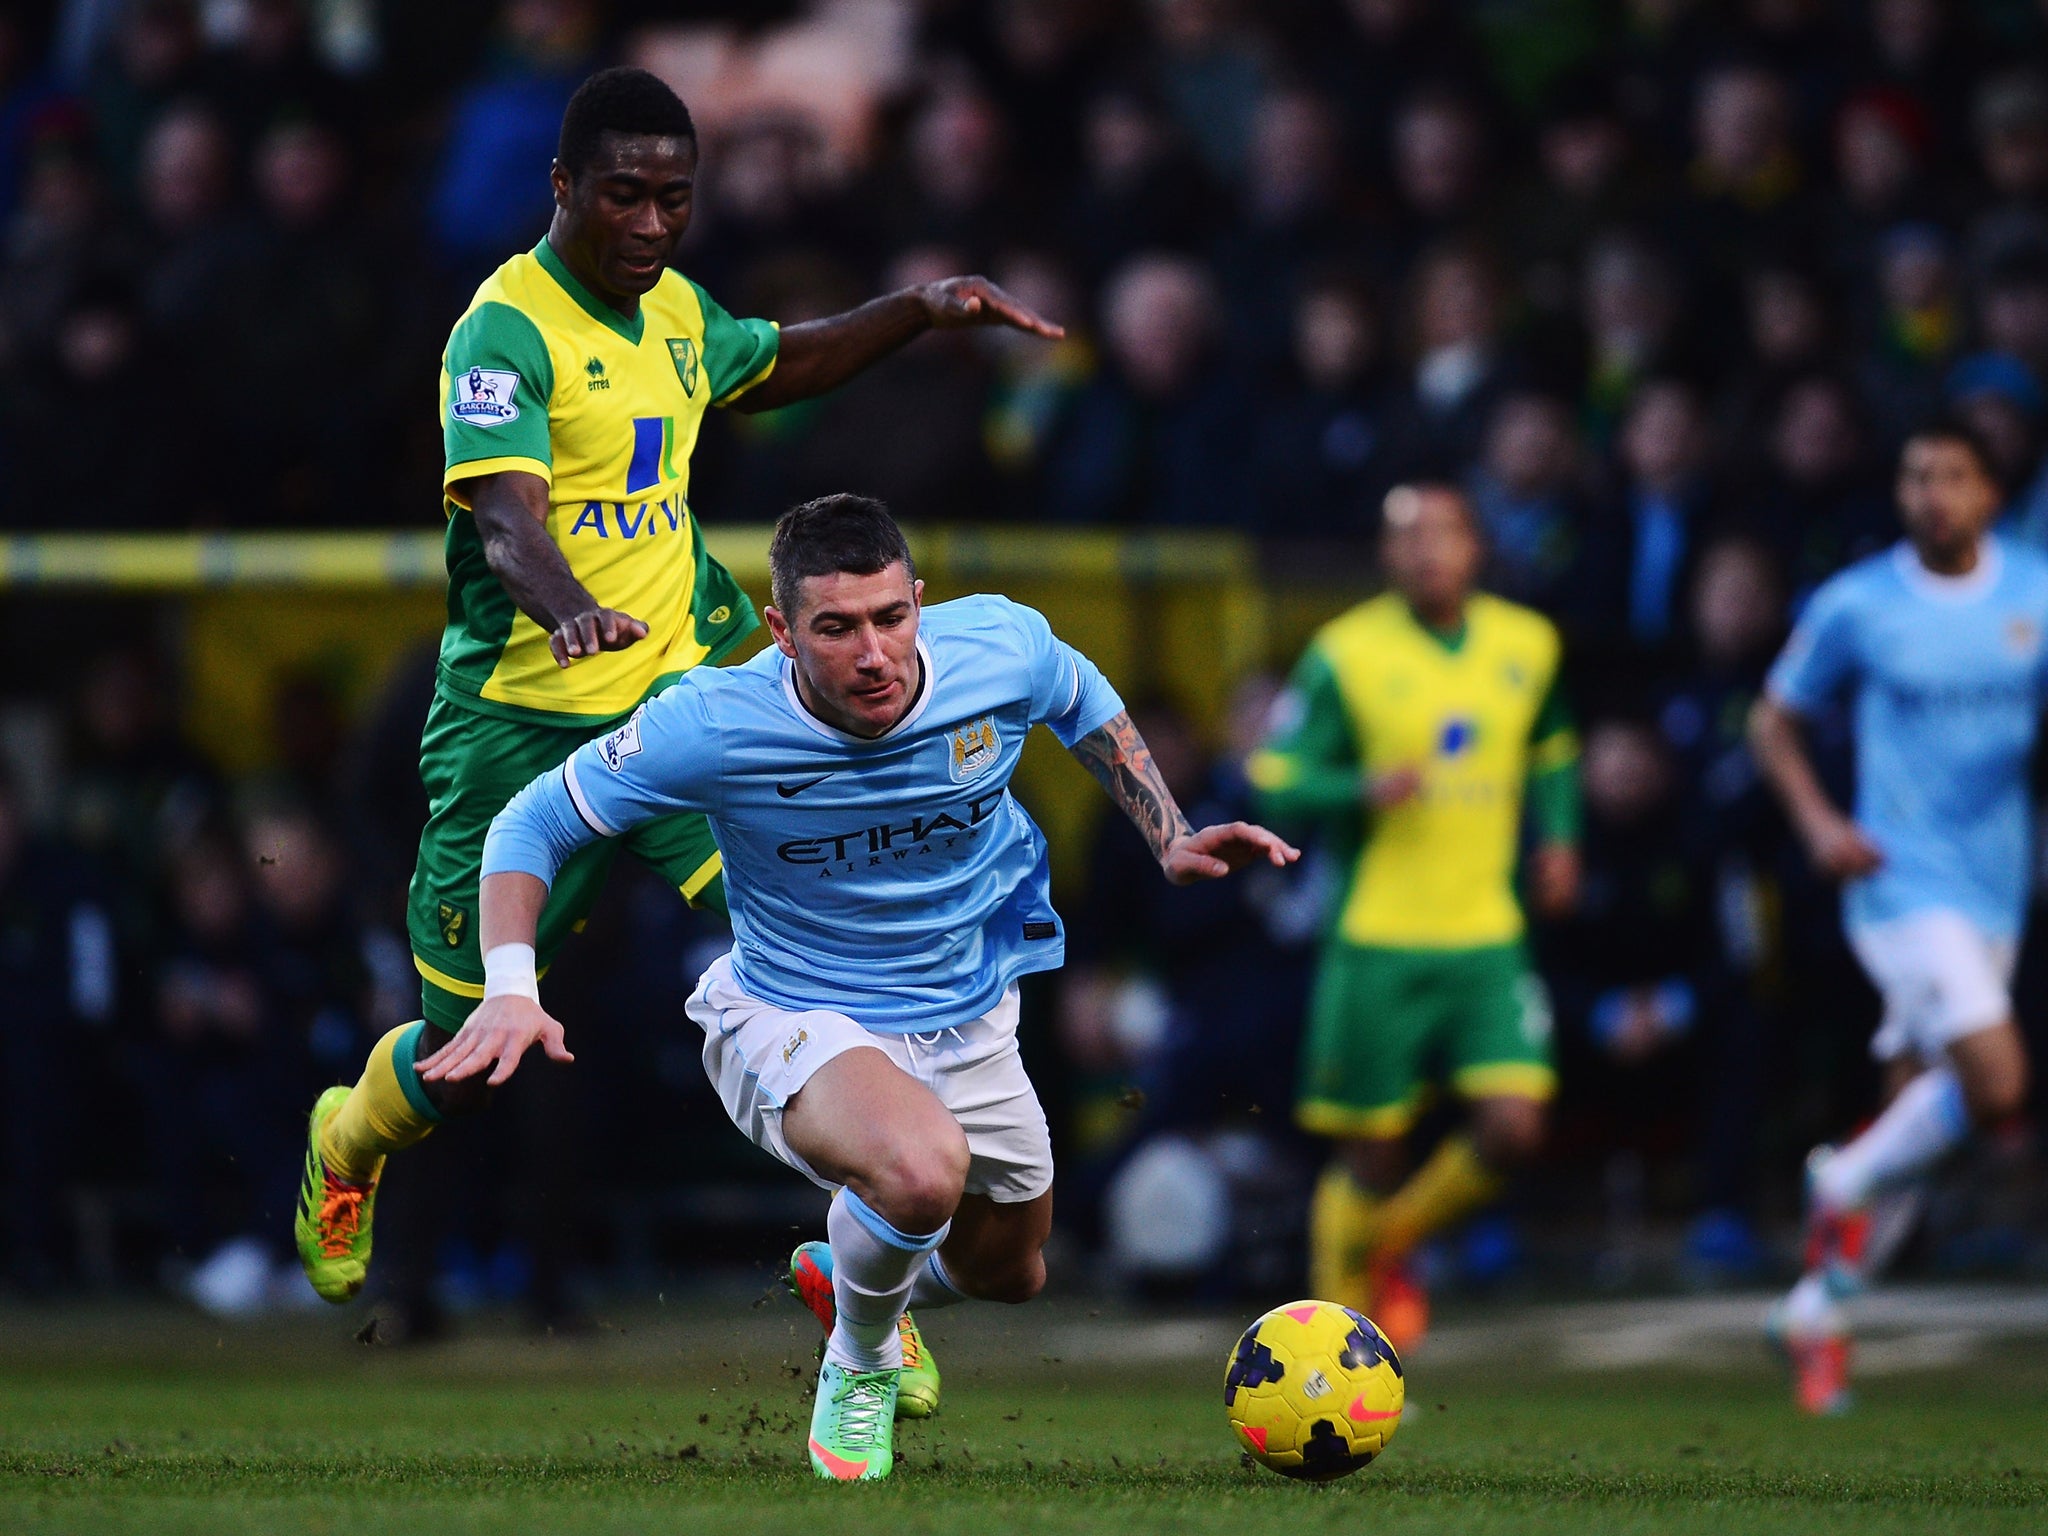 Manchester City defender Aleksandar Kolarov falls to the under pressure from Norwich midfielder Alexander Tettey